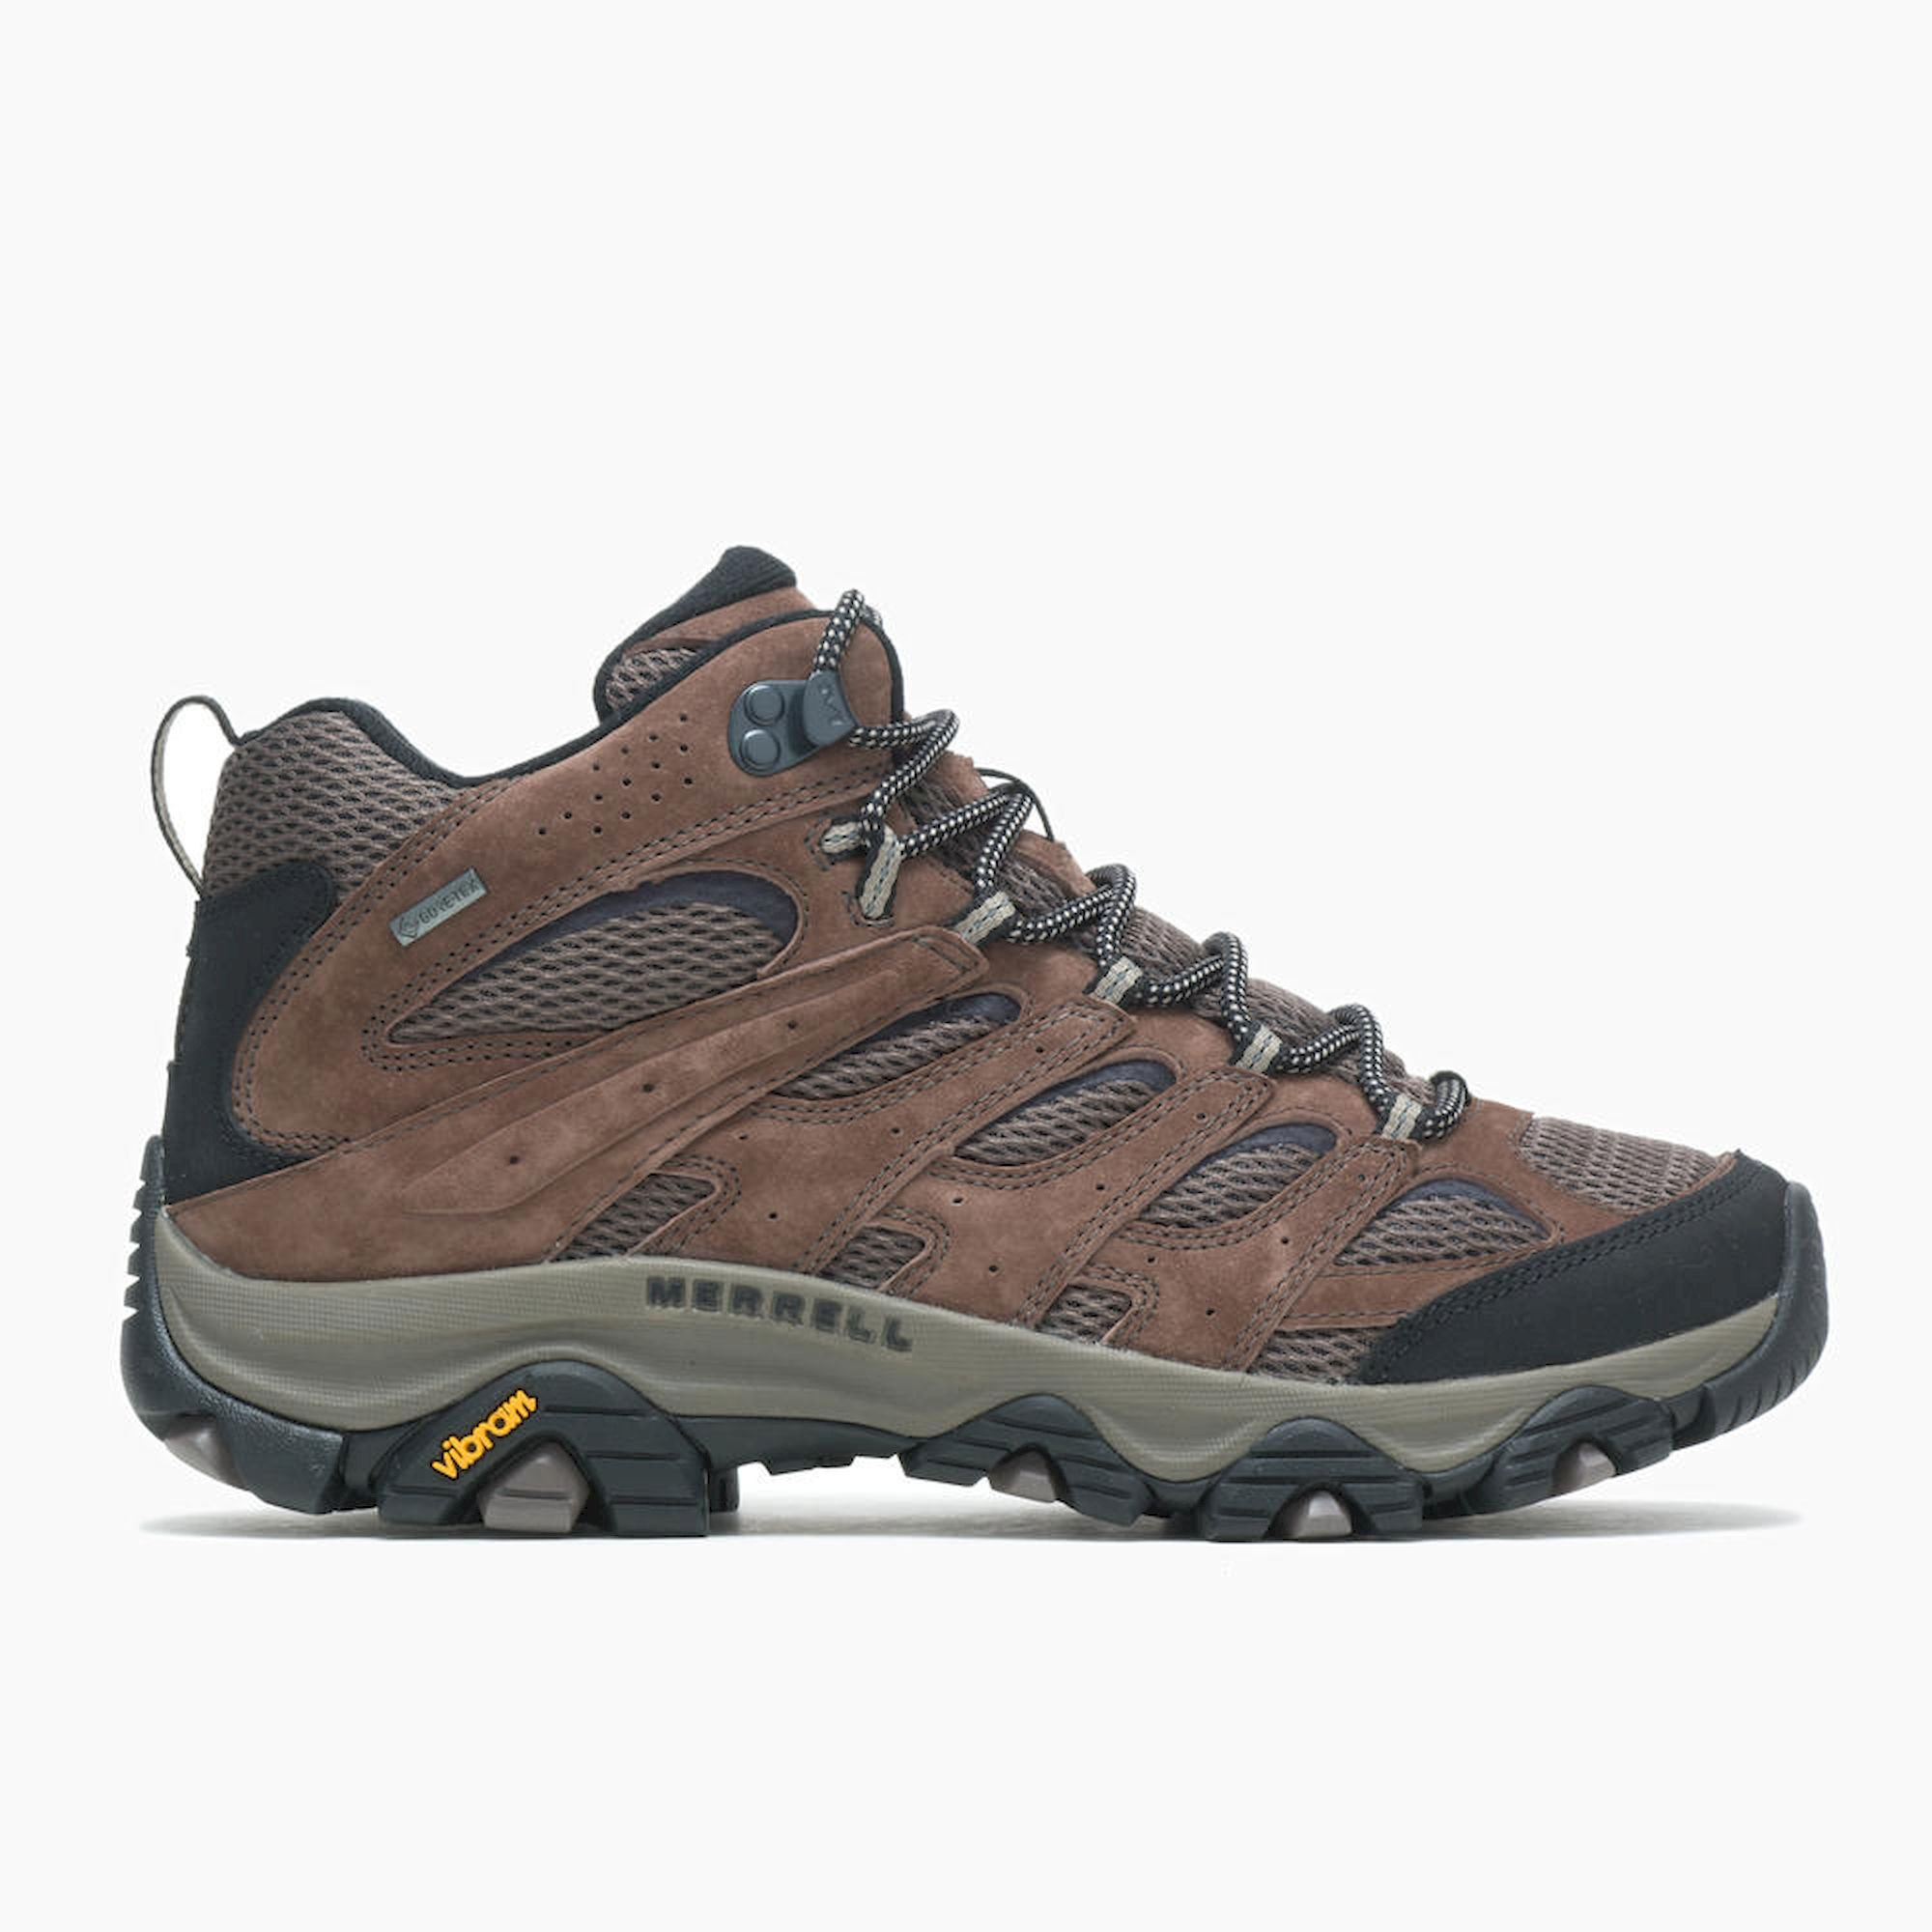 Merrell Moab 3 Mid GTX - Hiking shoes - Men's